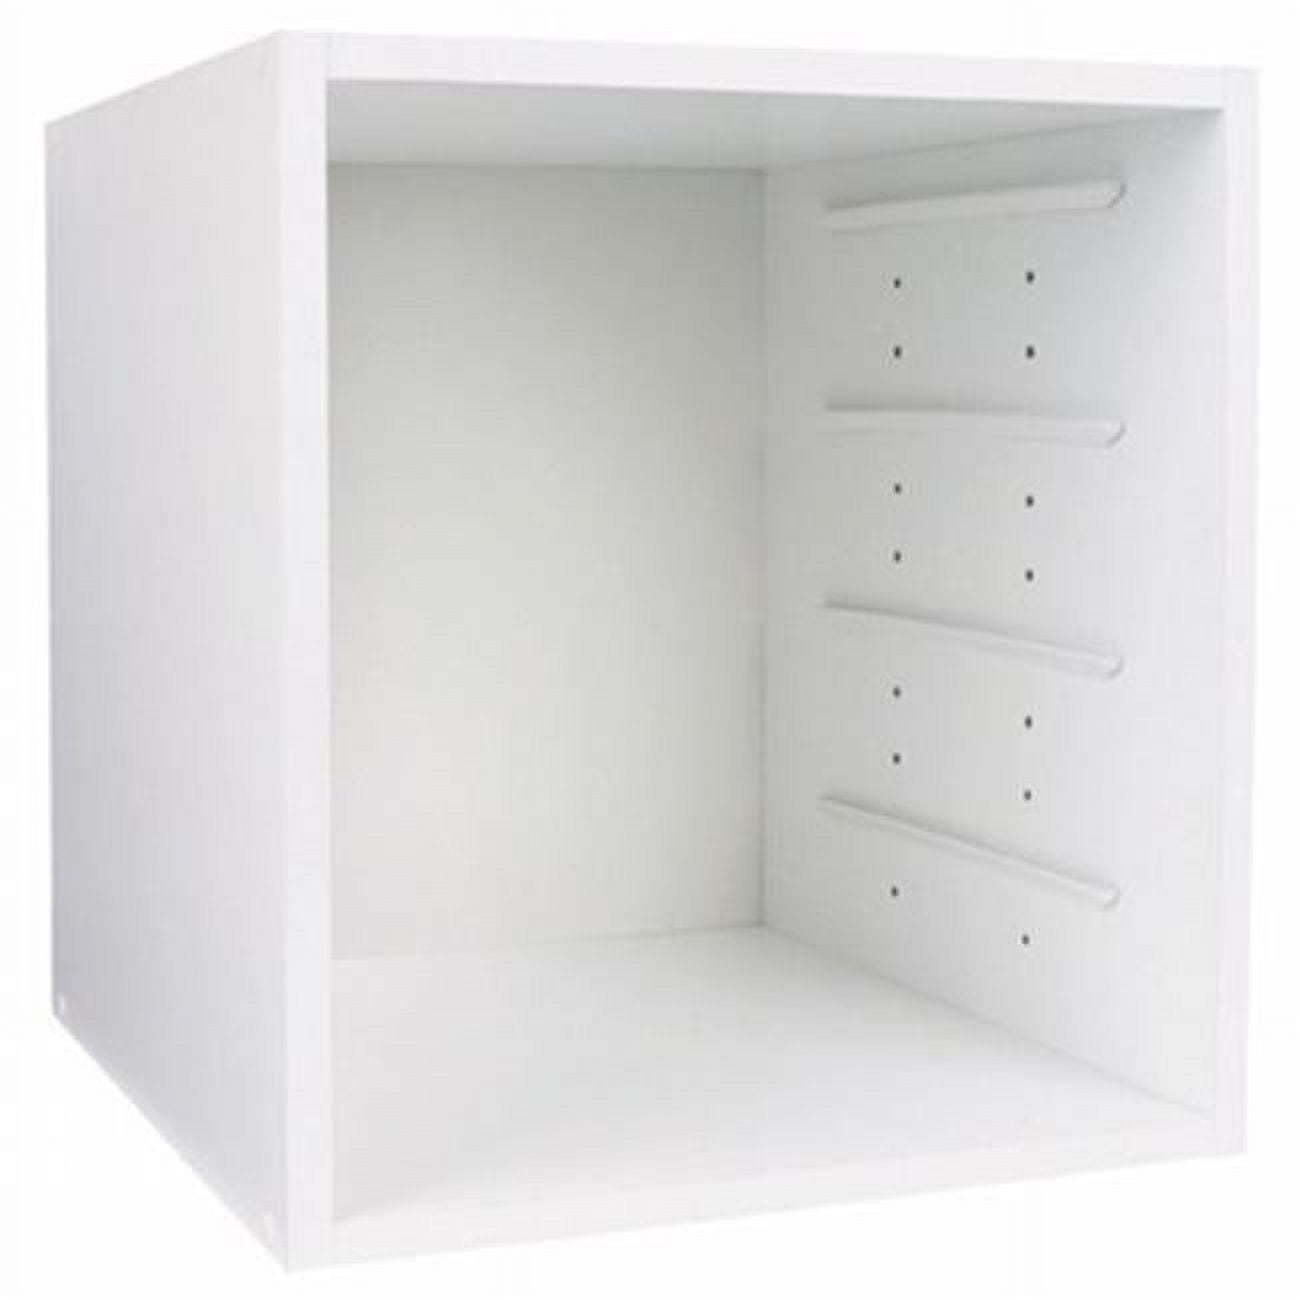 ArtBin Super Satchel Boxes and Storage Cube